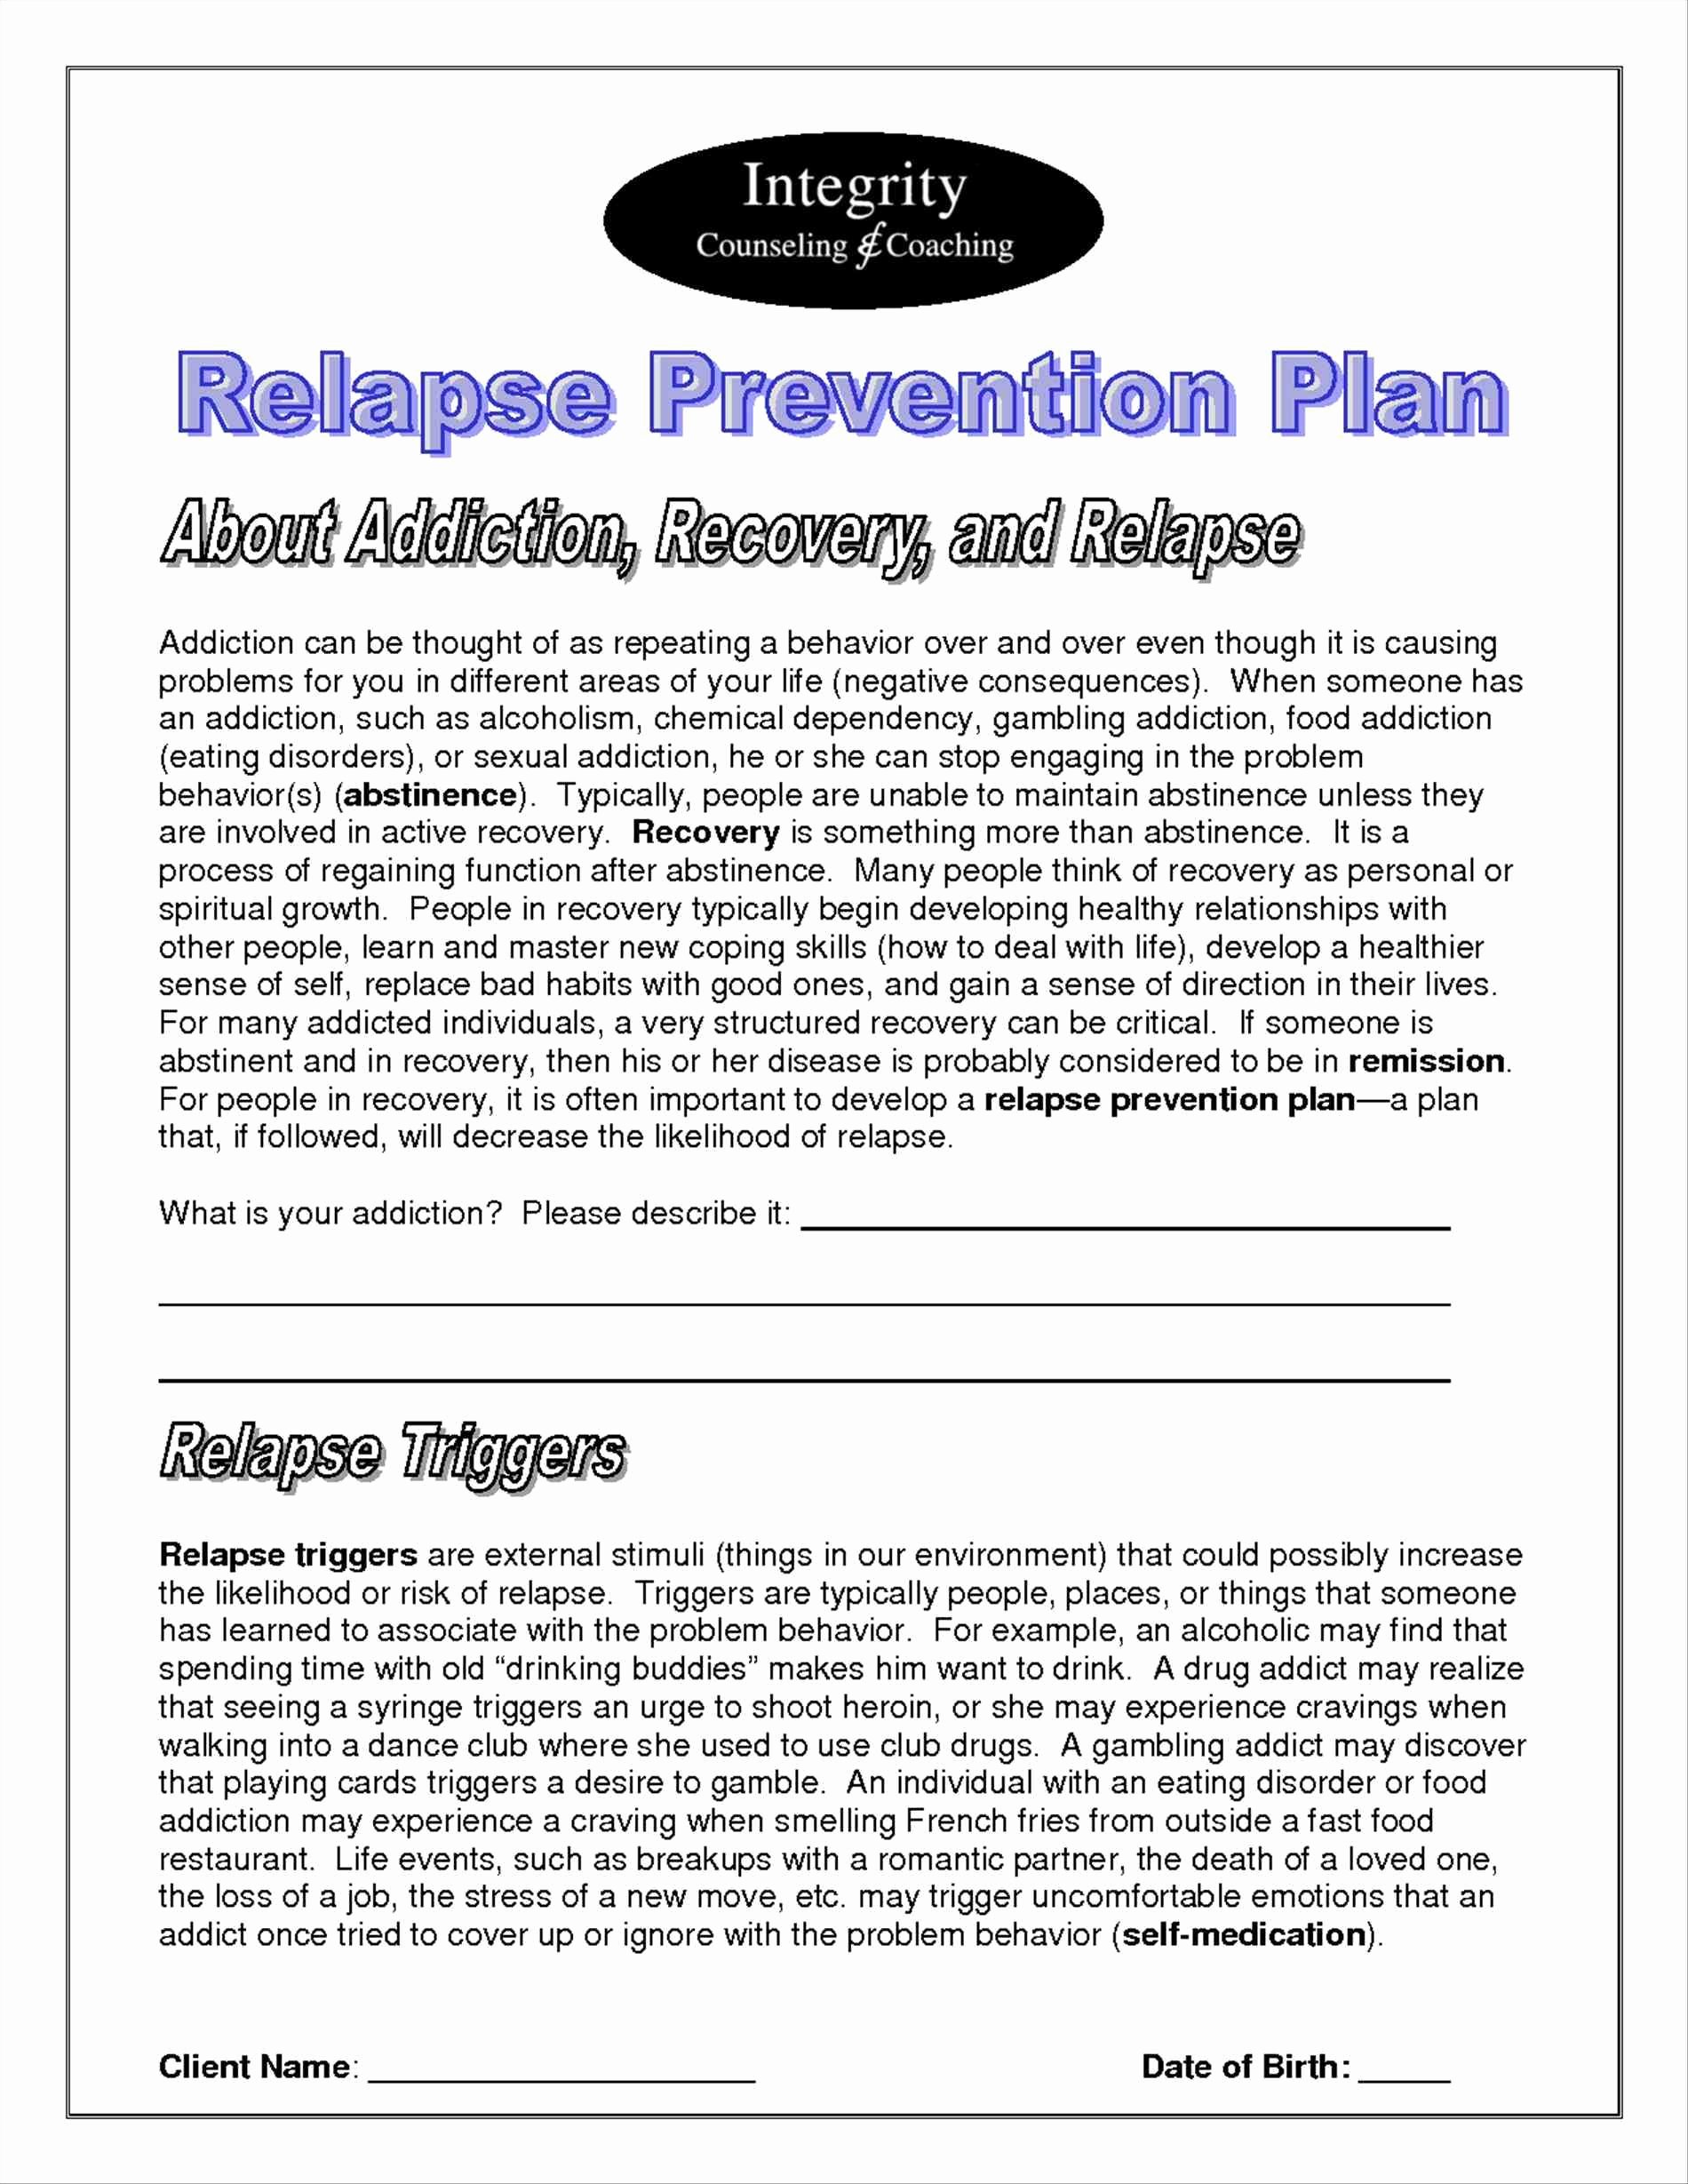 Relapse Prevention Plan Template New Relapse Prevention Plan Worksheet Worksheets